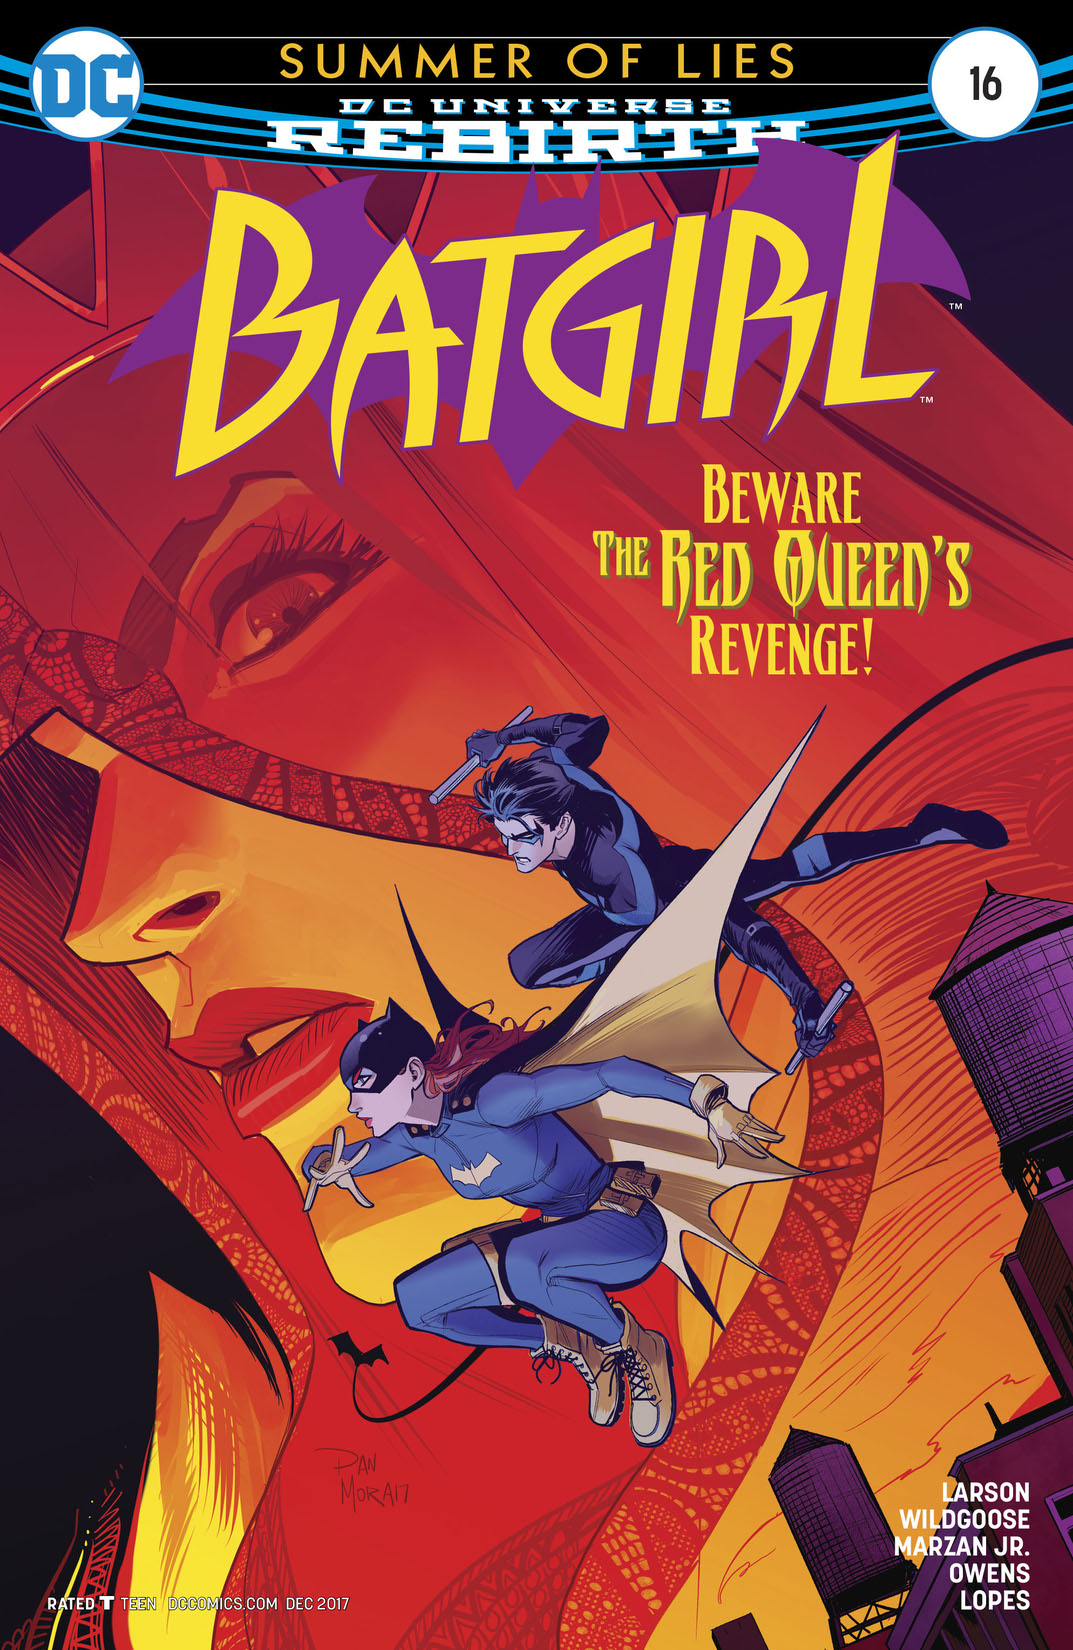 Batgirl (2016-) #16 preview images